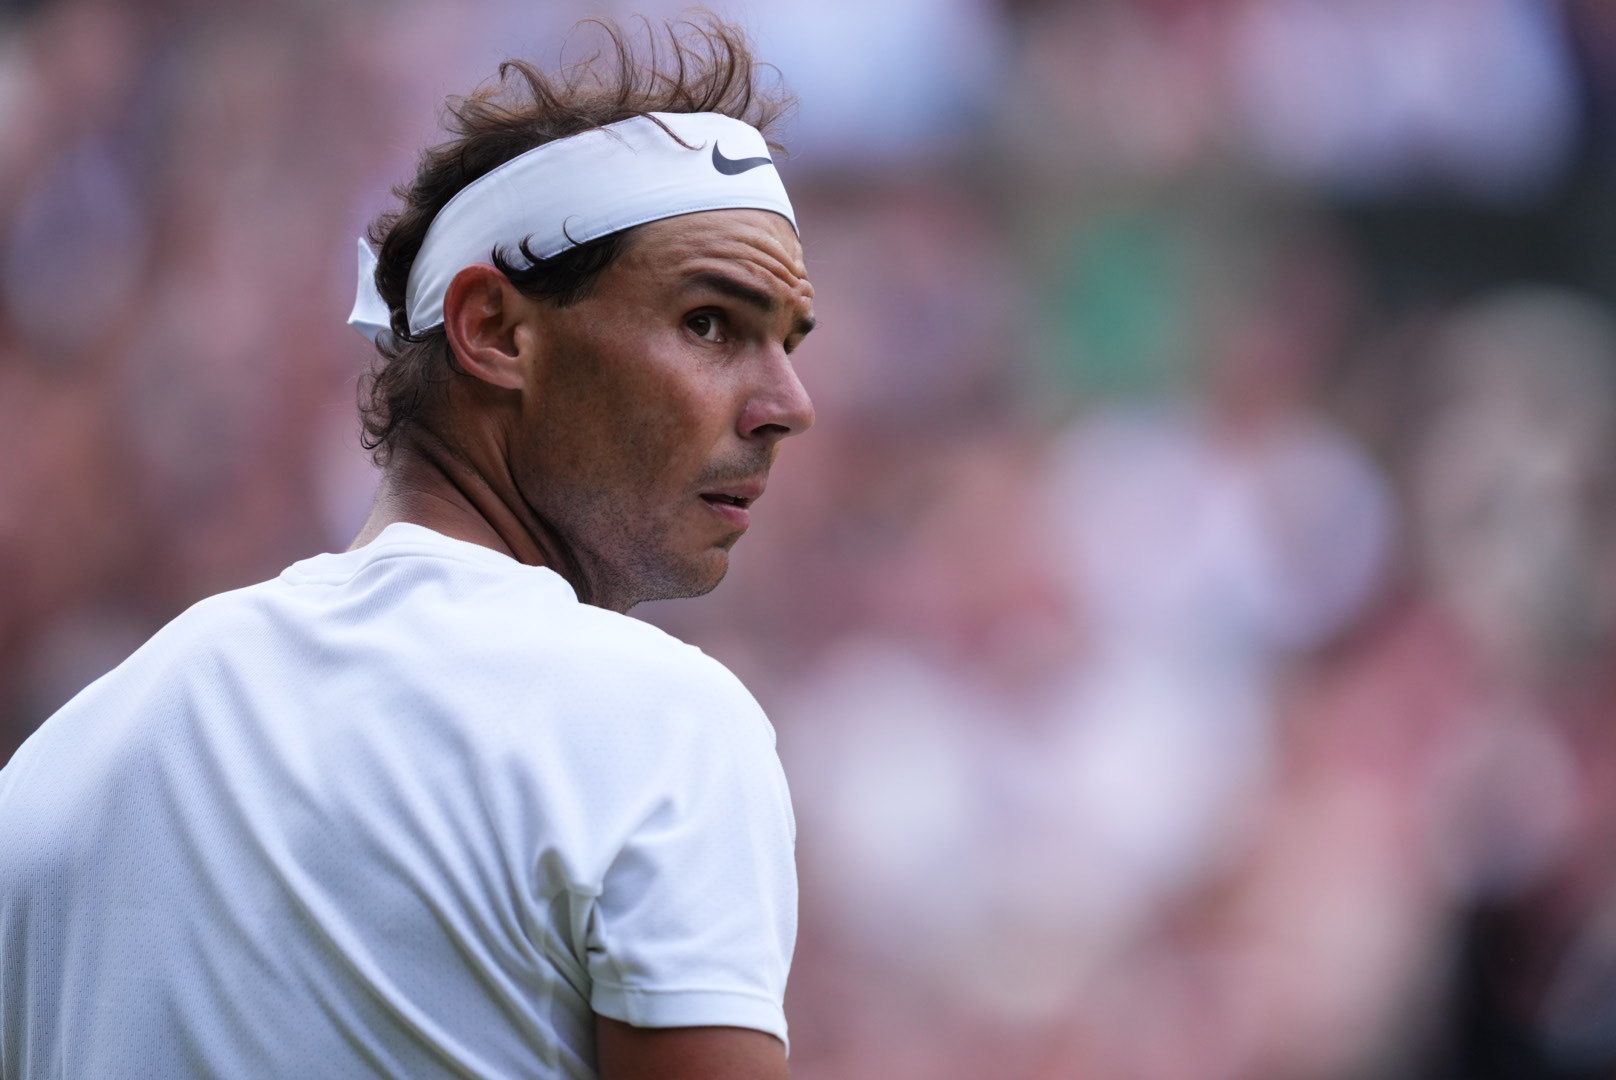 Report: Rafael Nadal ‘wants’ to play against Nick Kyrgios in Wimbledon semis